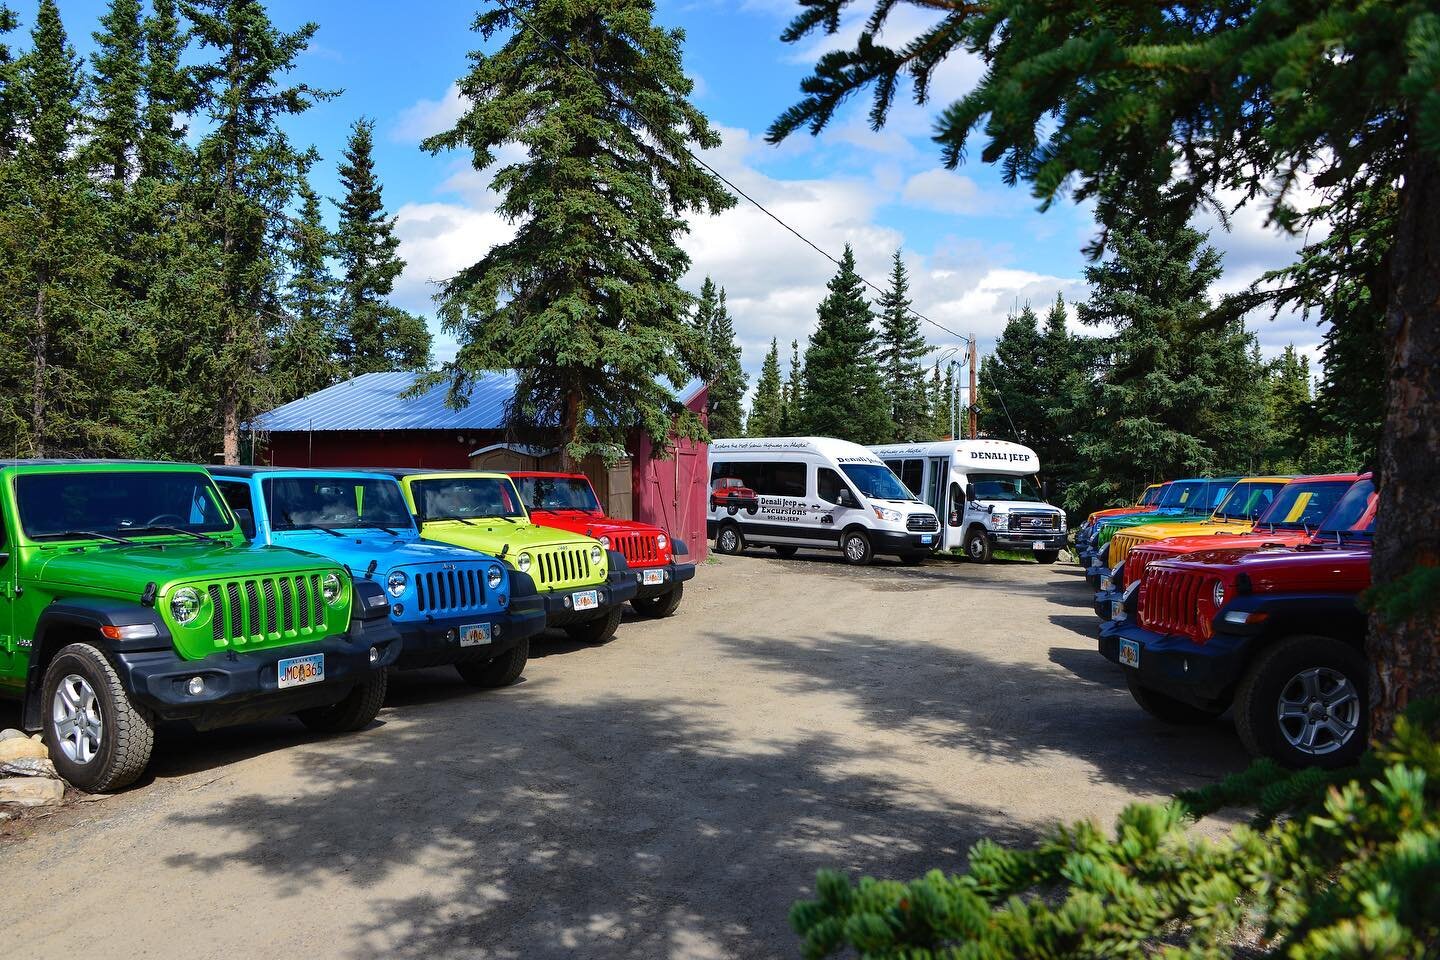 What&rsquo;s your favorite color Jeep? #denali #denalinationalpark #alaska #jeepwrangler #jeep #jeeptour #denalijeep #denalijeepexcursions #denalijeeptours #denaliexperiences #experiencedenali #denalitours #jeeprentals #denalijeeprentals #travelalask